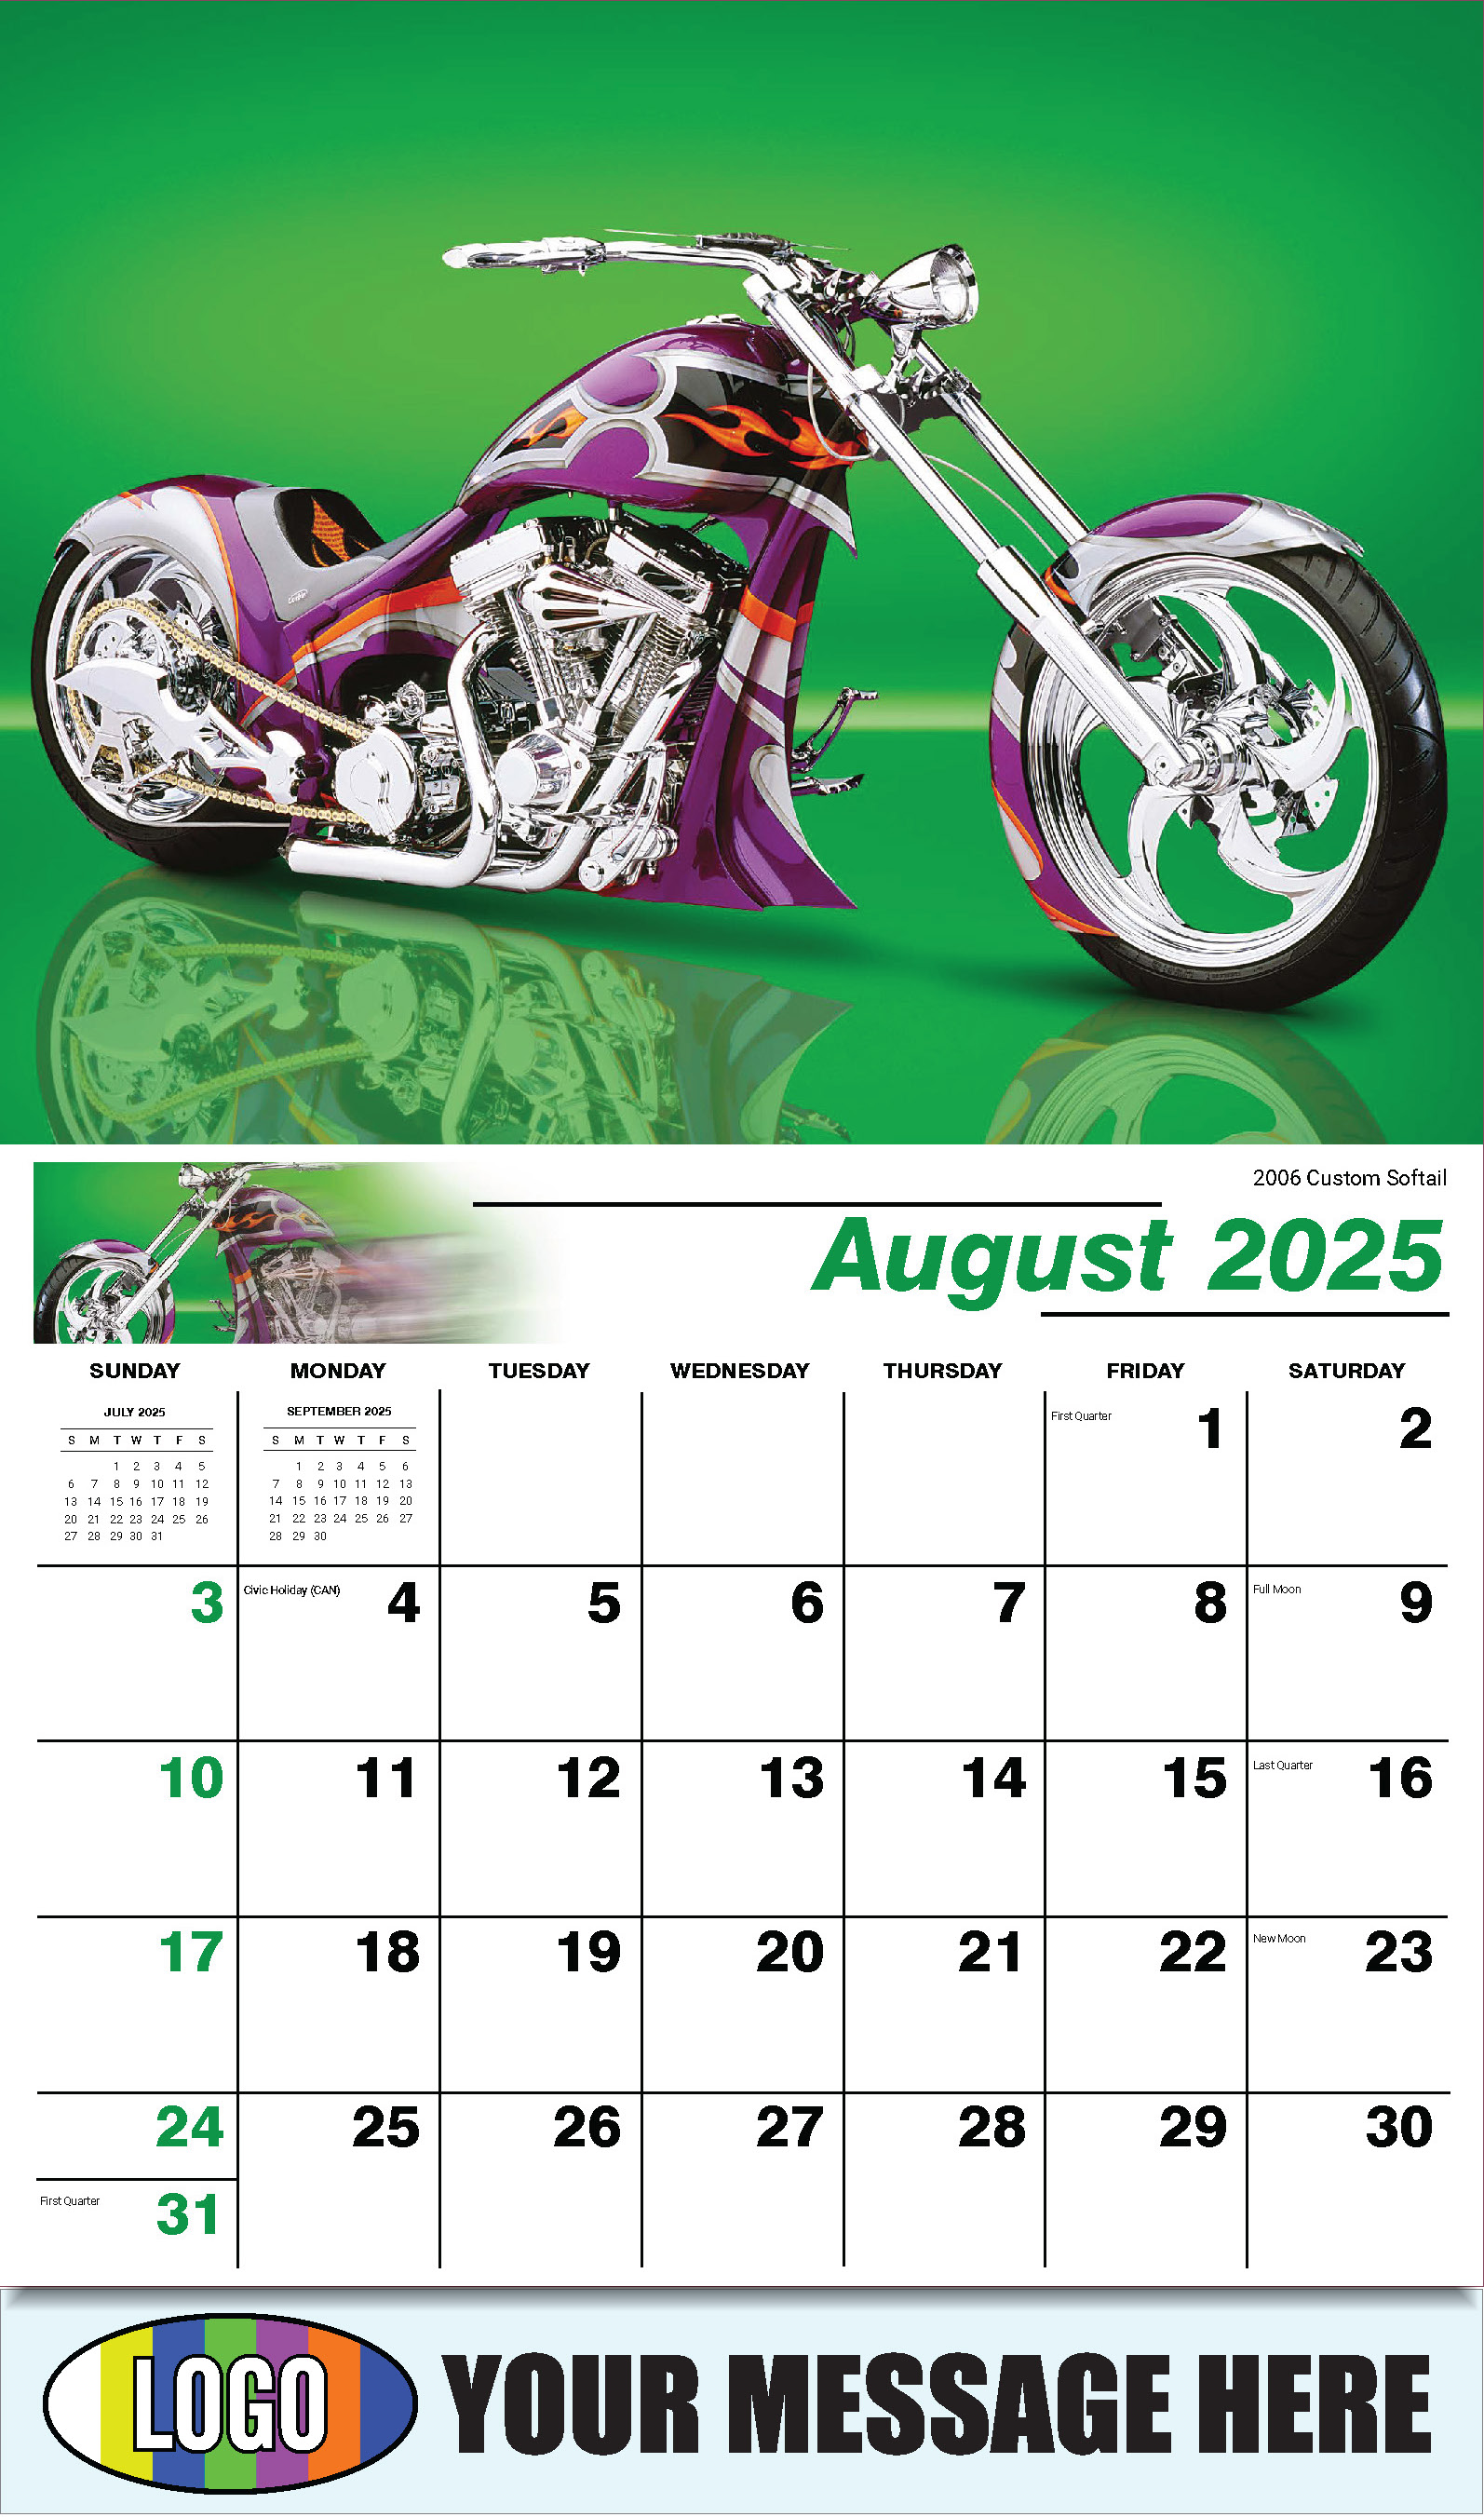 Motorcycle Mania 2025 Automotve Business Advertising Wall Calendar - August